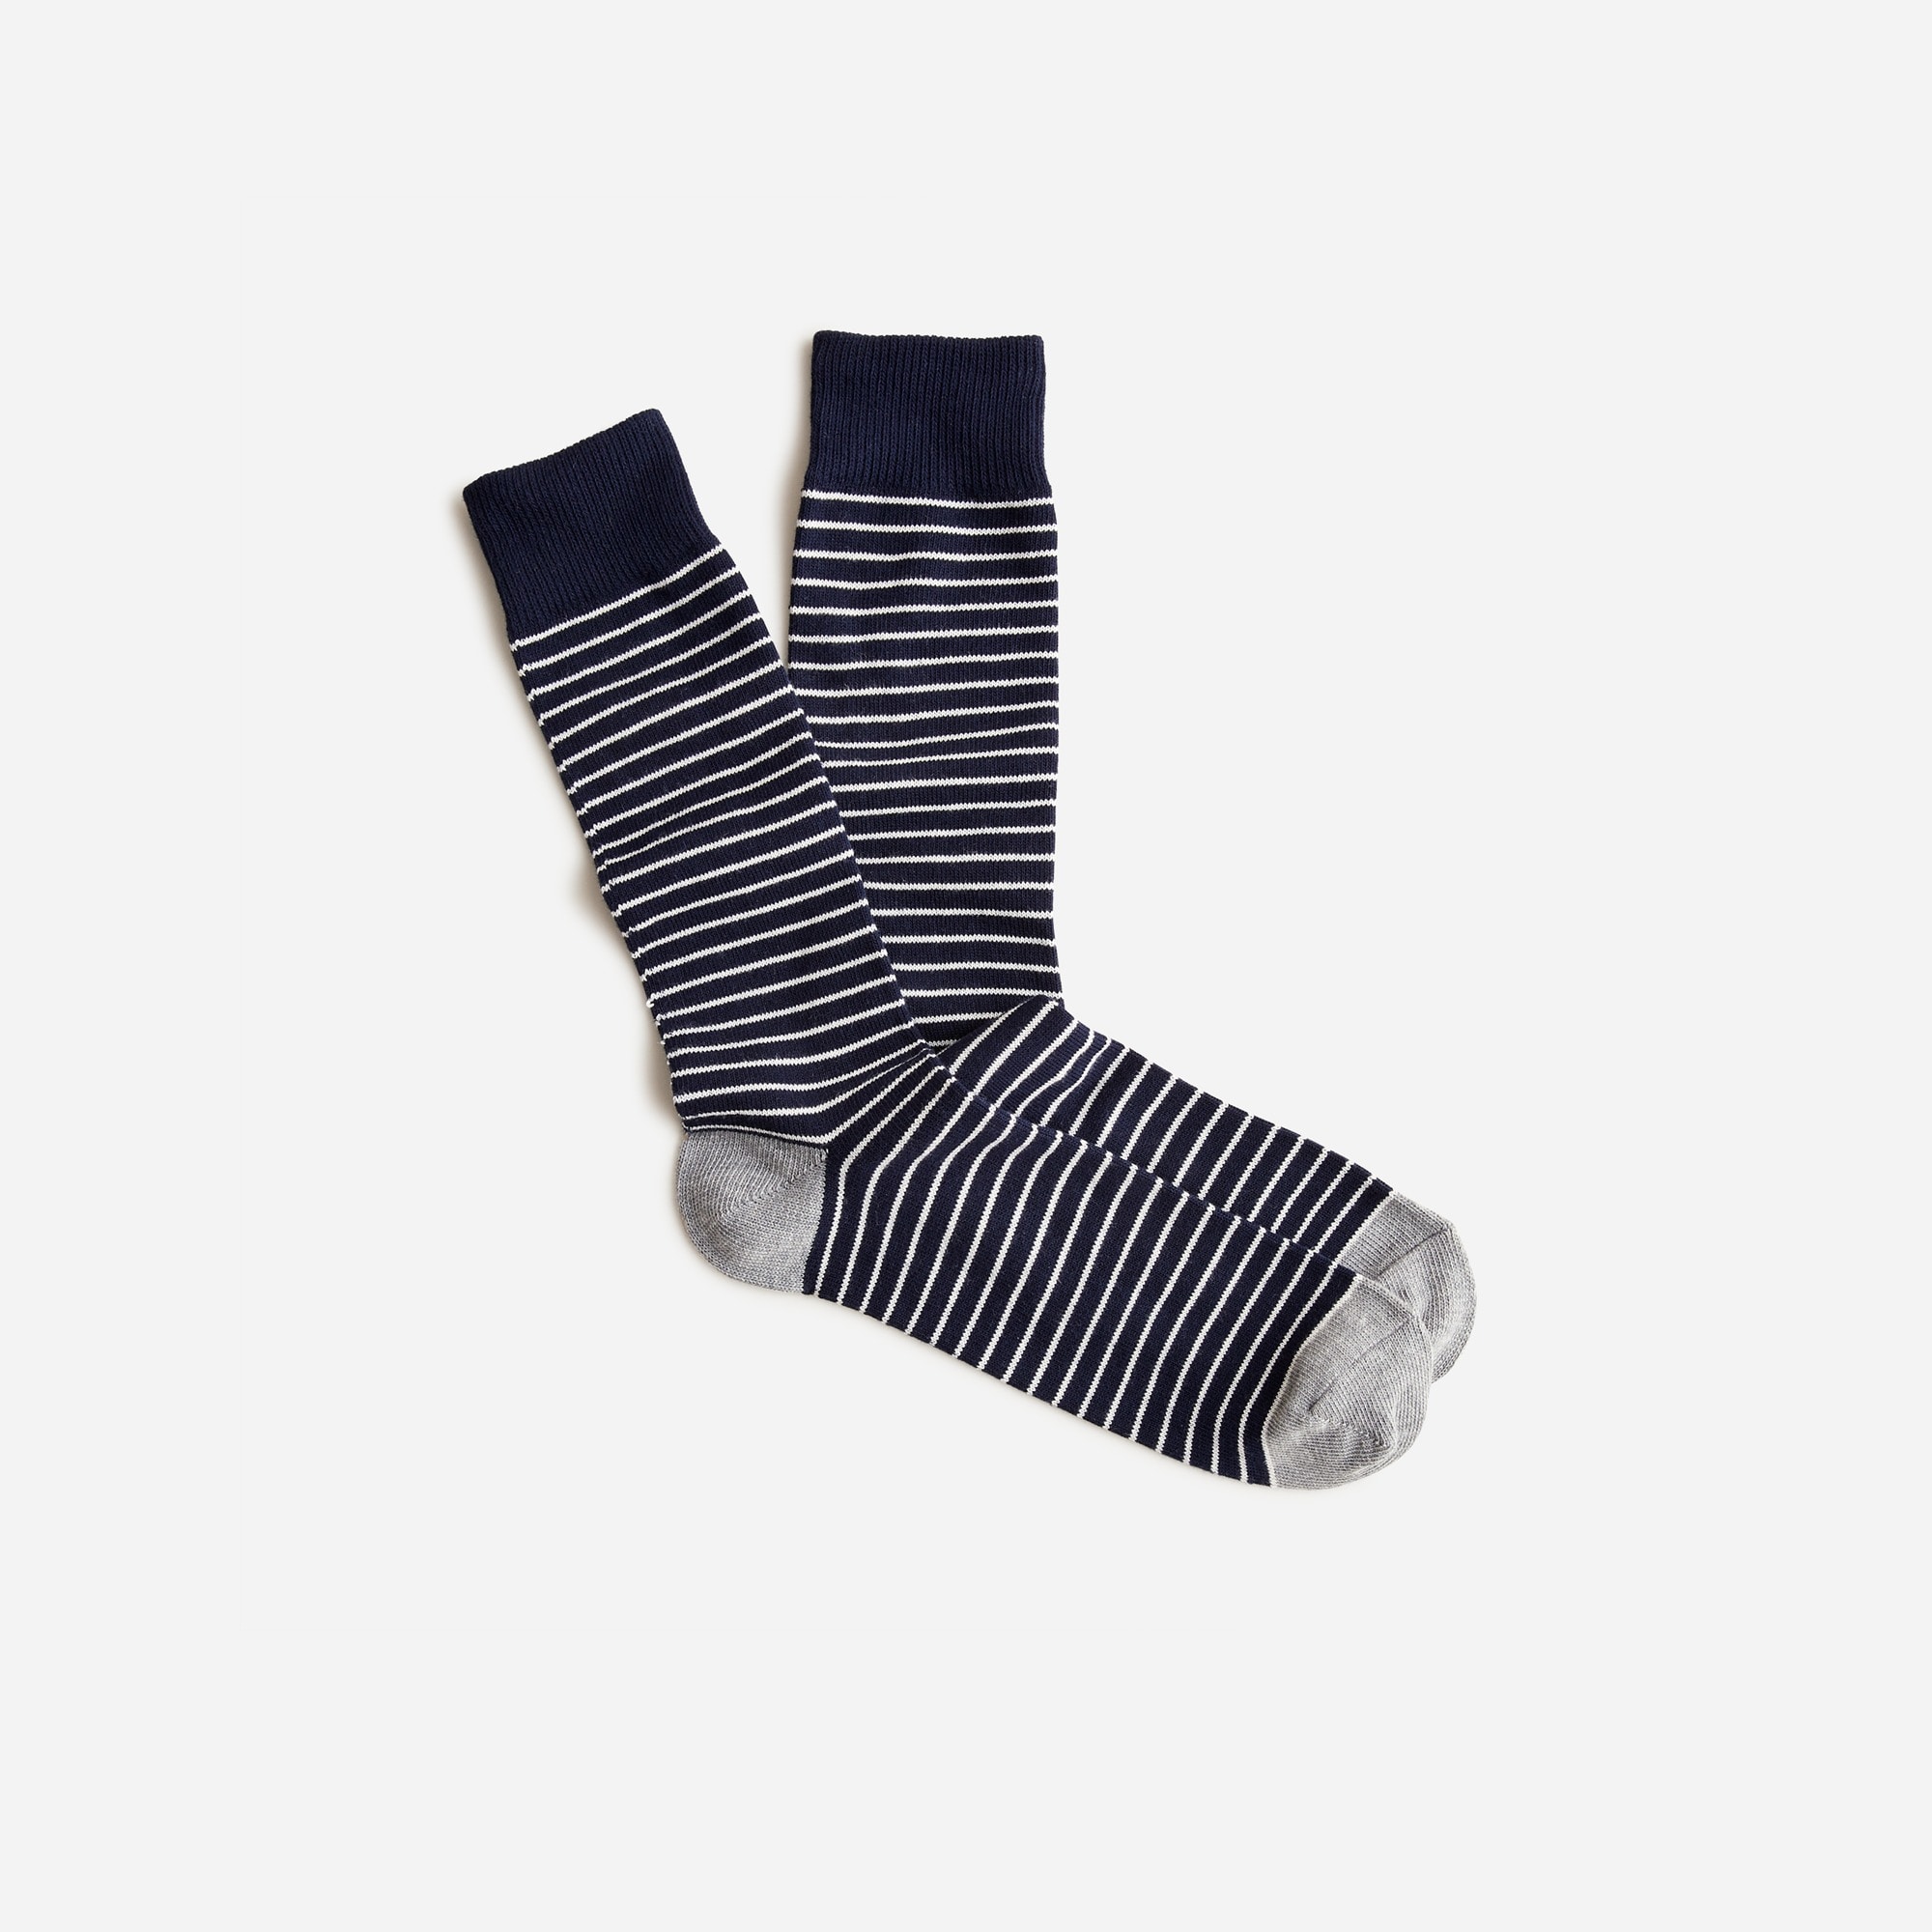 Jcrew Tipped microstriped socks